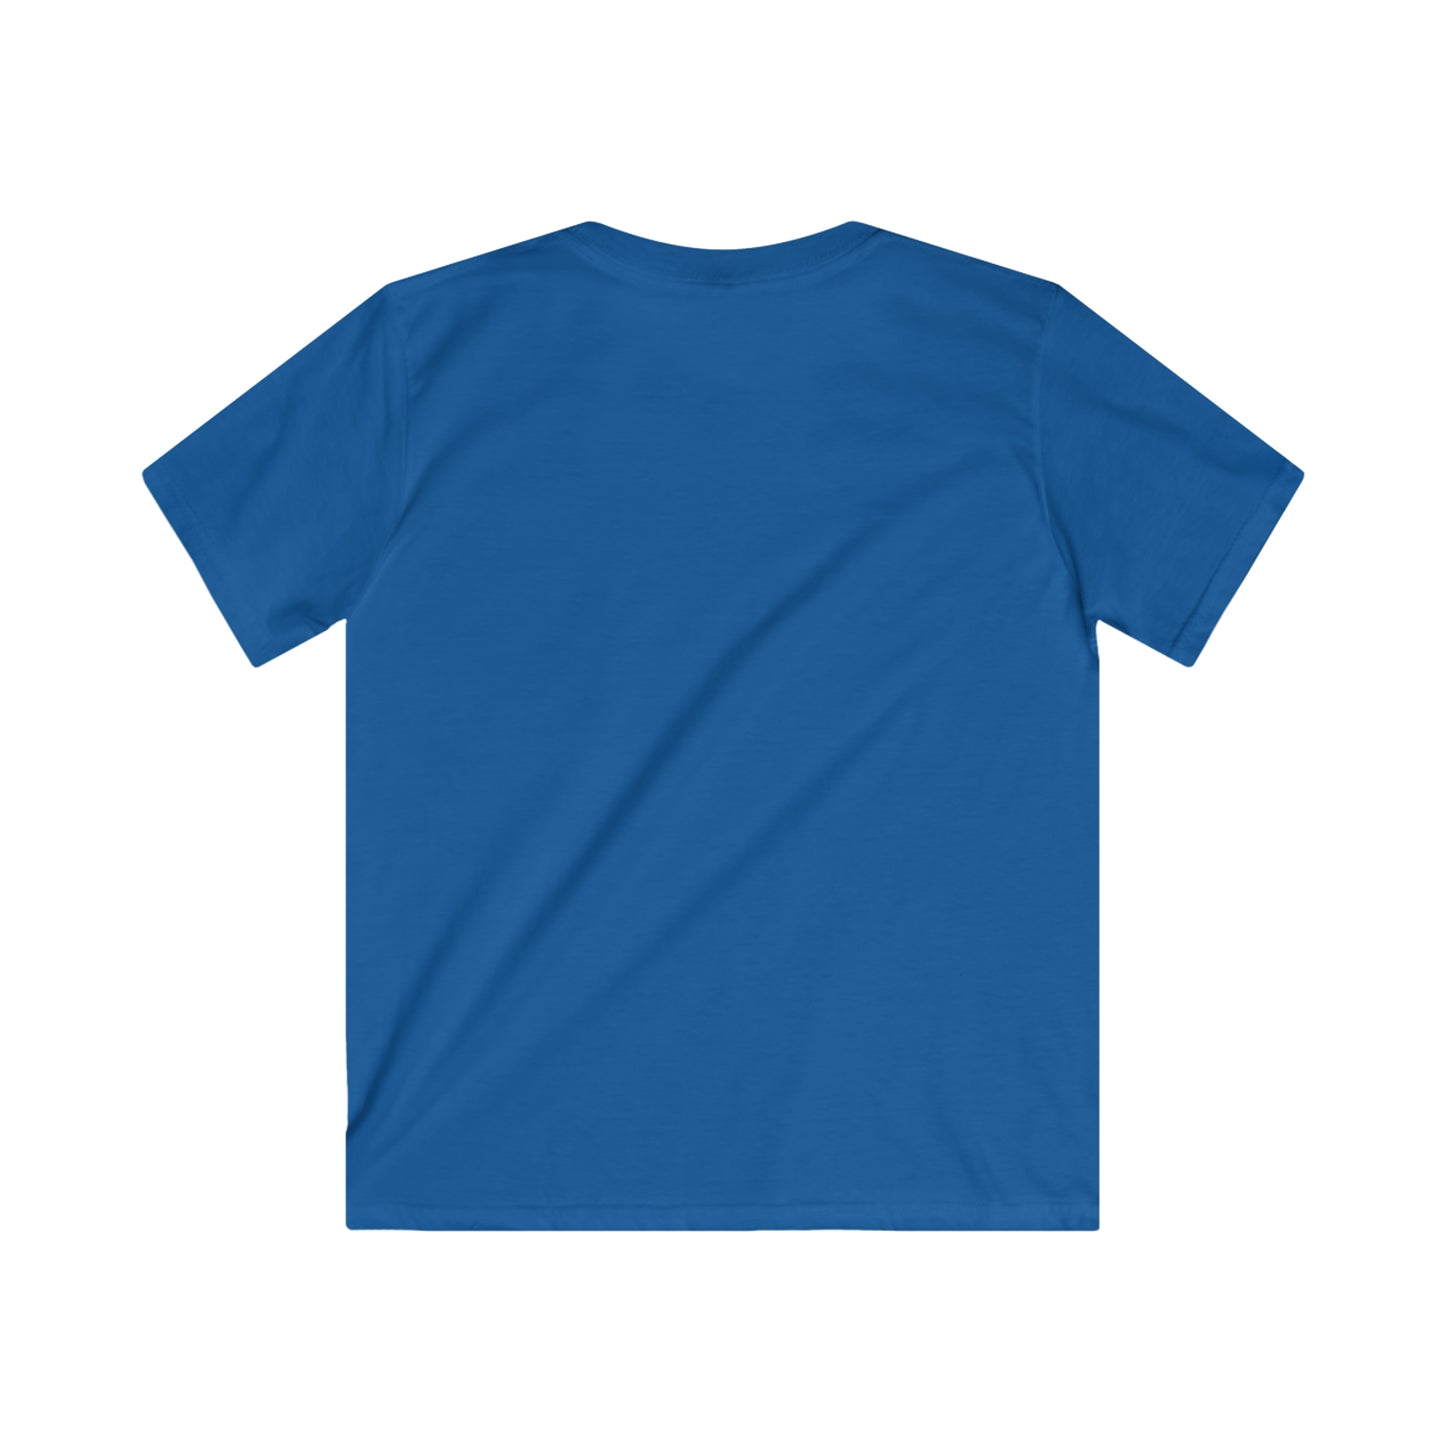 "Big Blue" Logo Kids T-Shirt